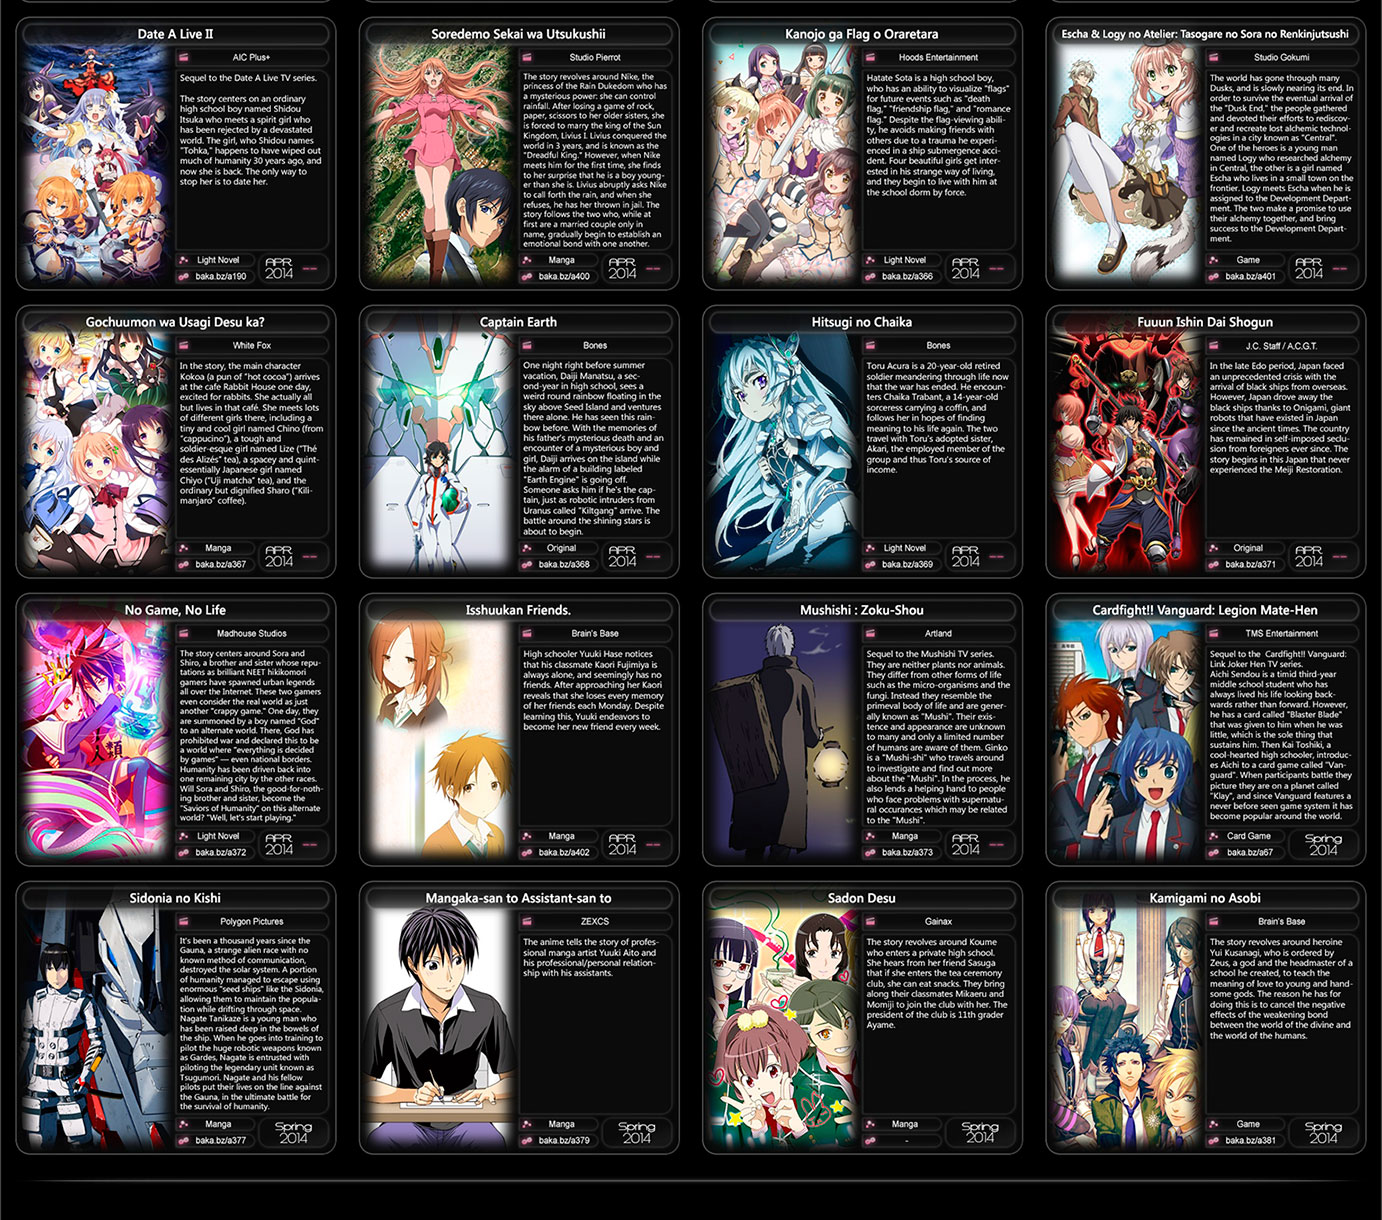 Estrenos-de-Anime-Primavera-2014-3 - Top 10 Animes Temporada Primavera 2014 [Final] - Hablemos de Anime y Manga